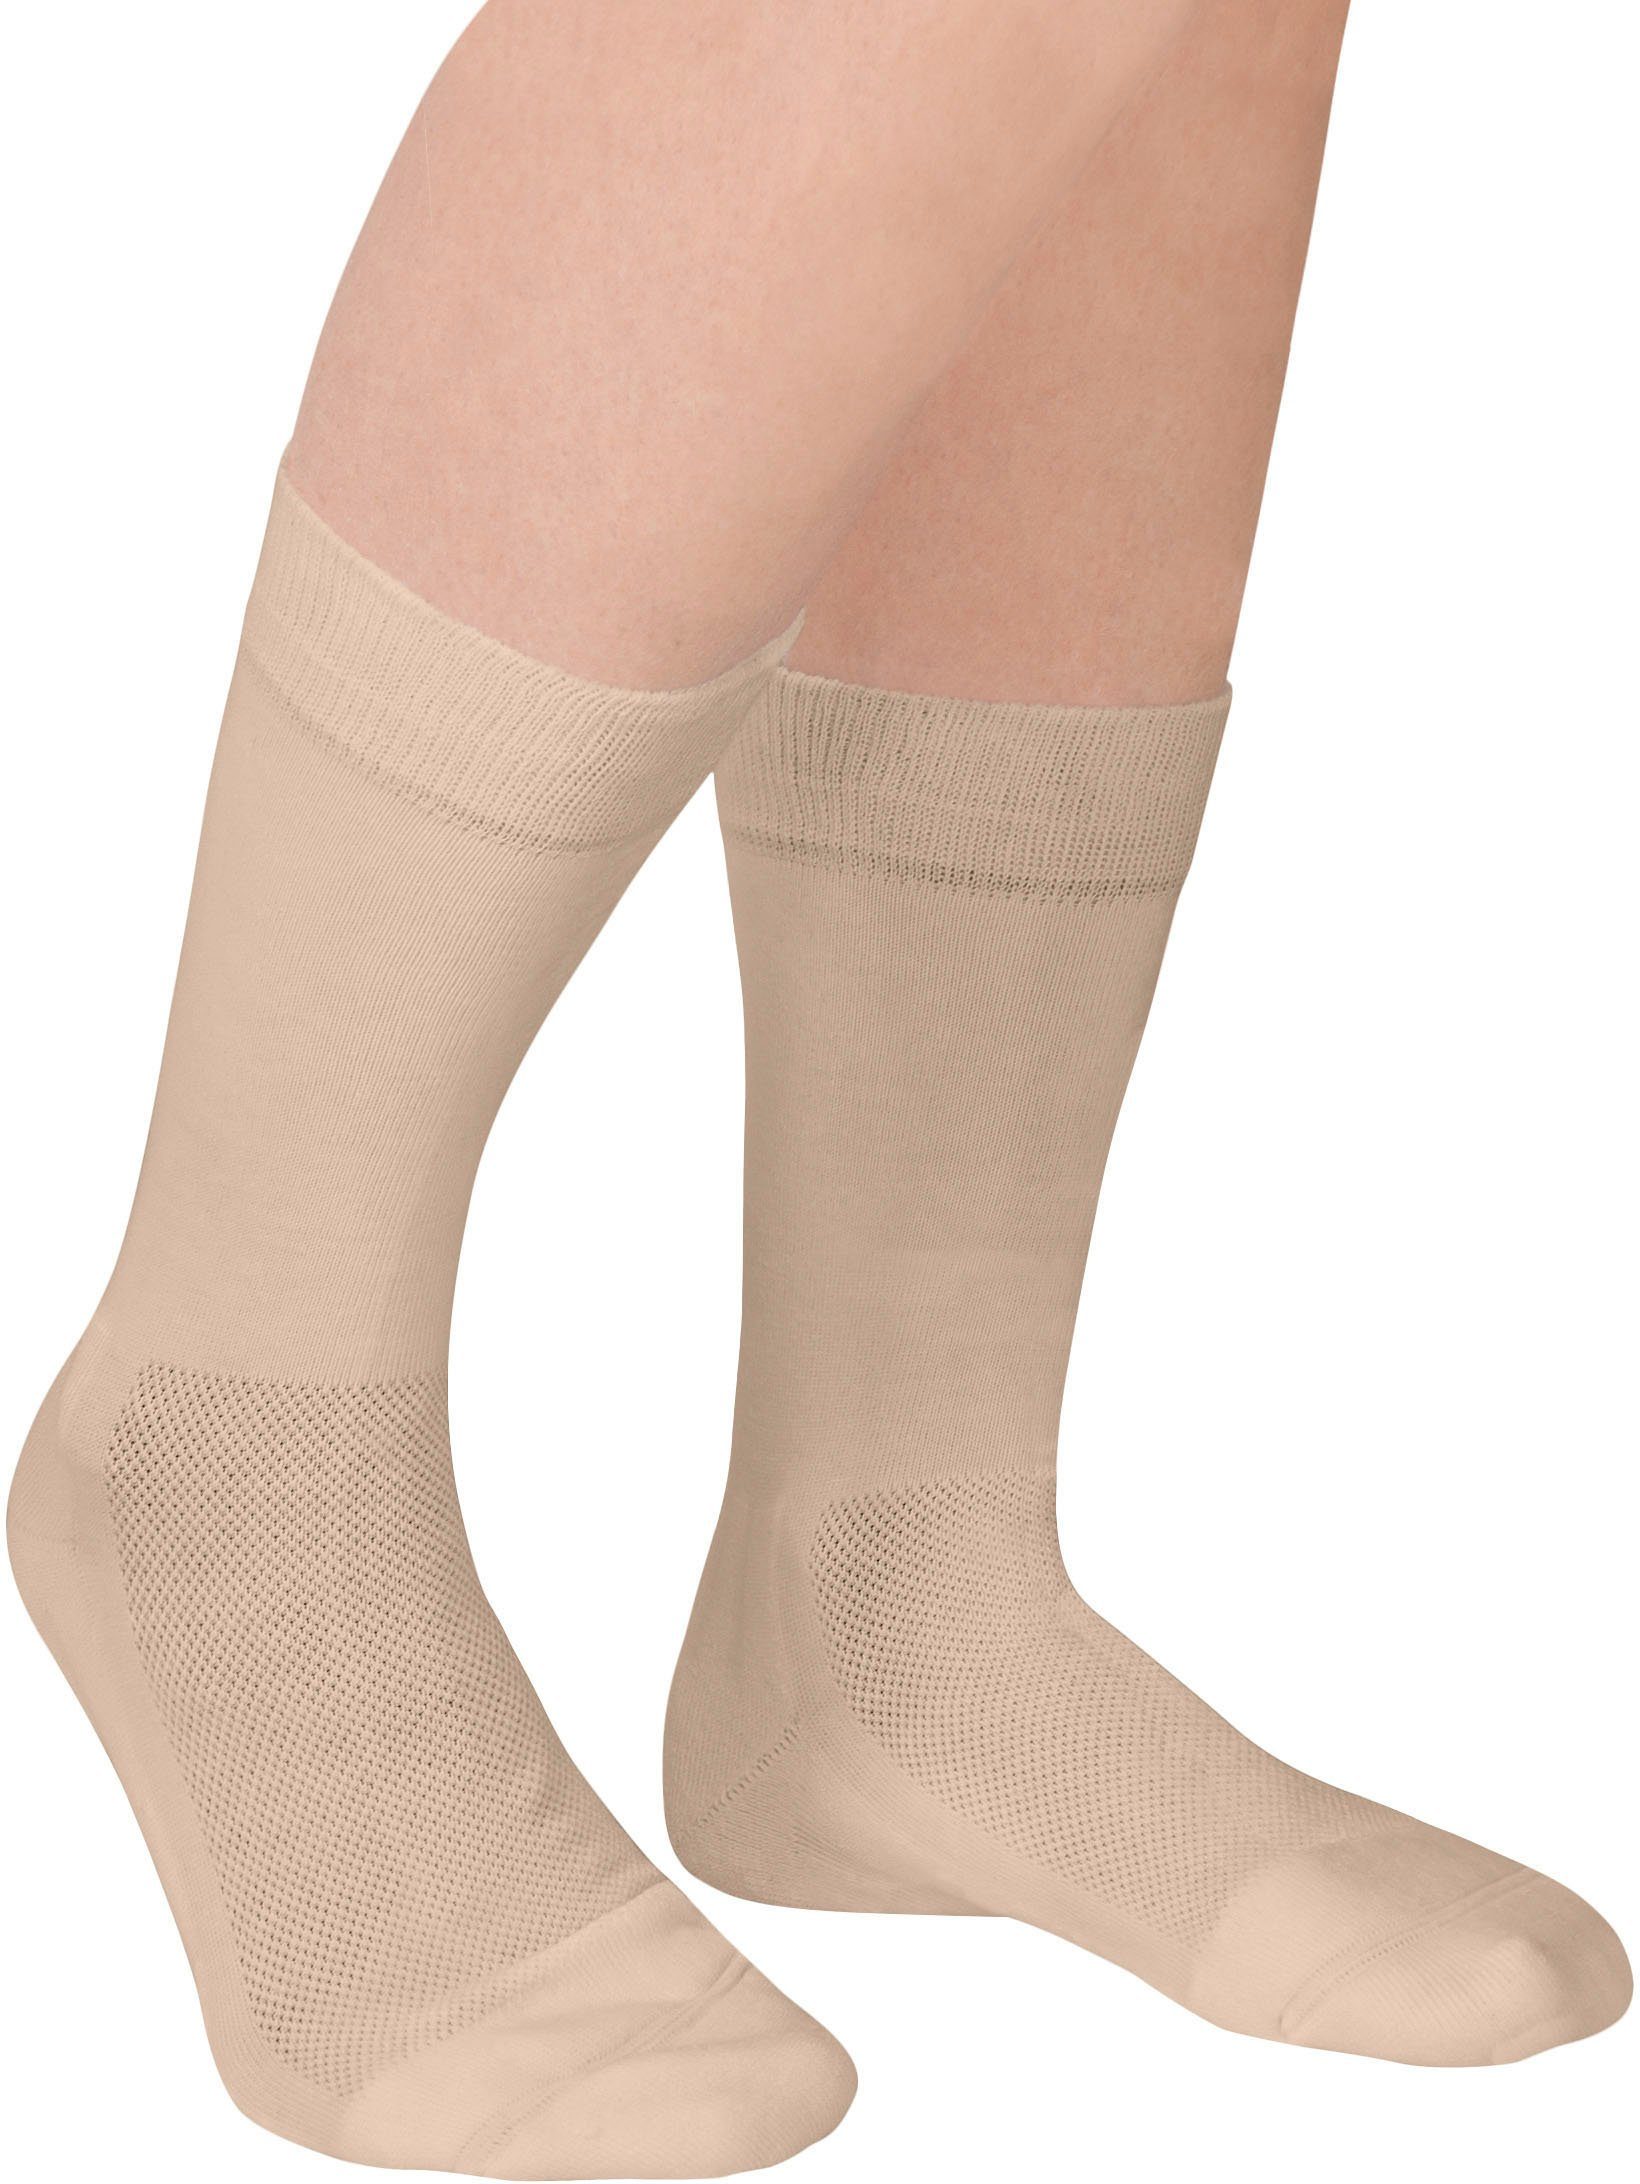 Diabetikersocken Socken Sensitiv Venenfeund beige Fußgut (2-Paar)